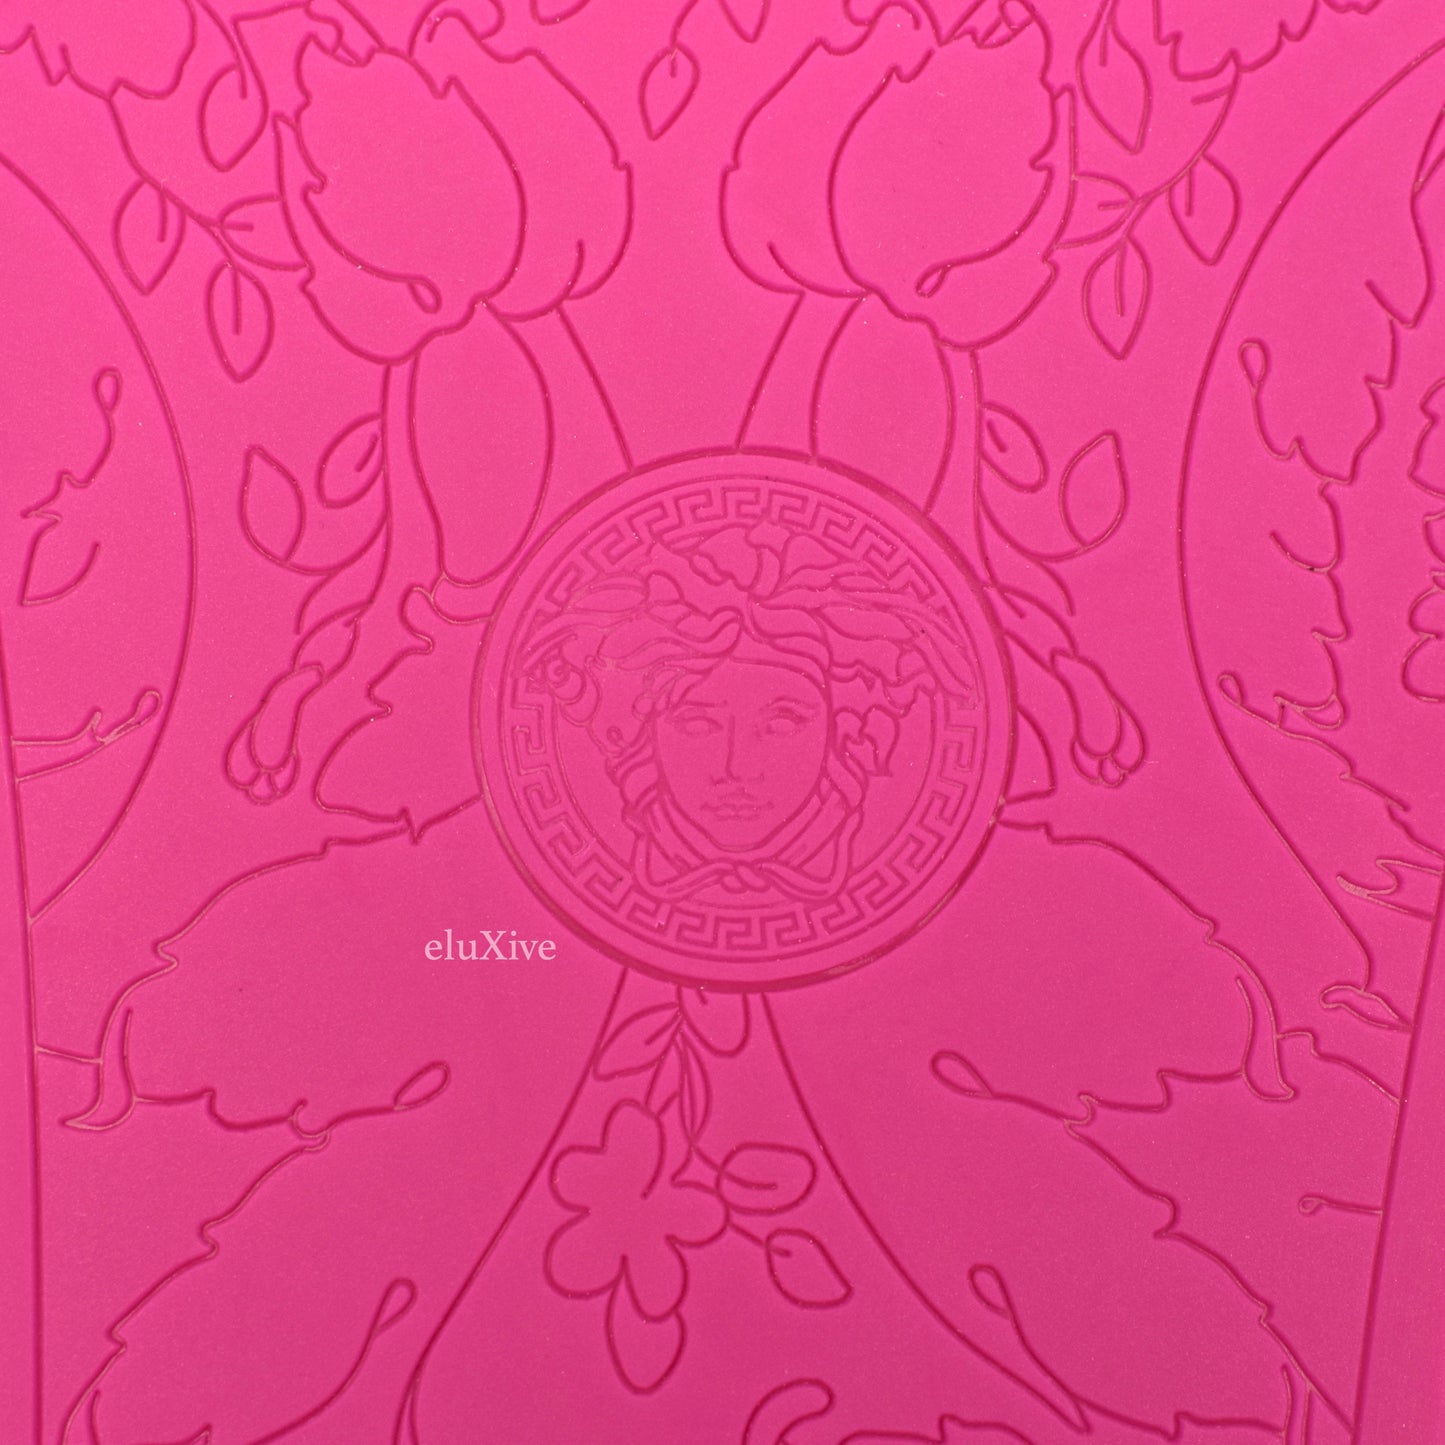 Versace - Hot Pink Faux Fur La Medusa Logo Slides